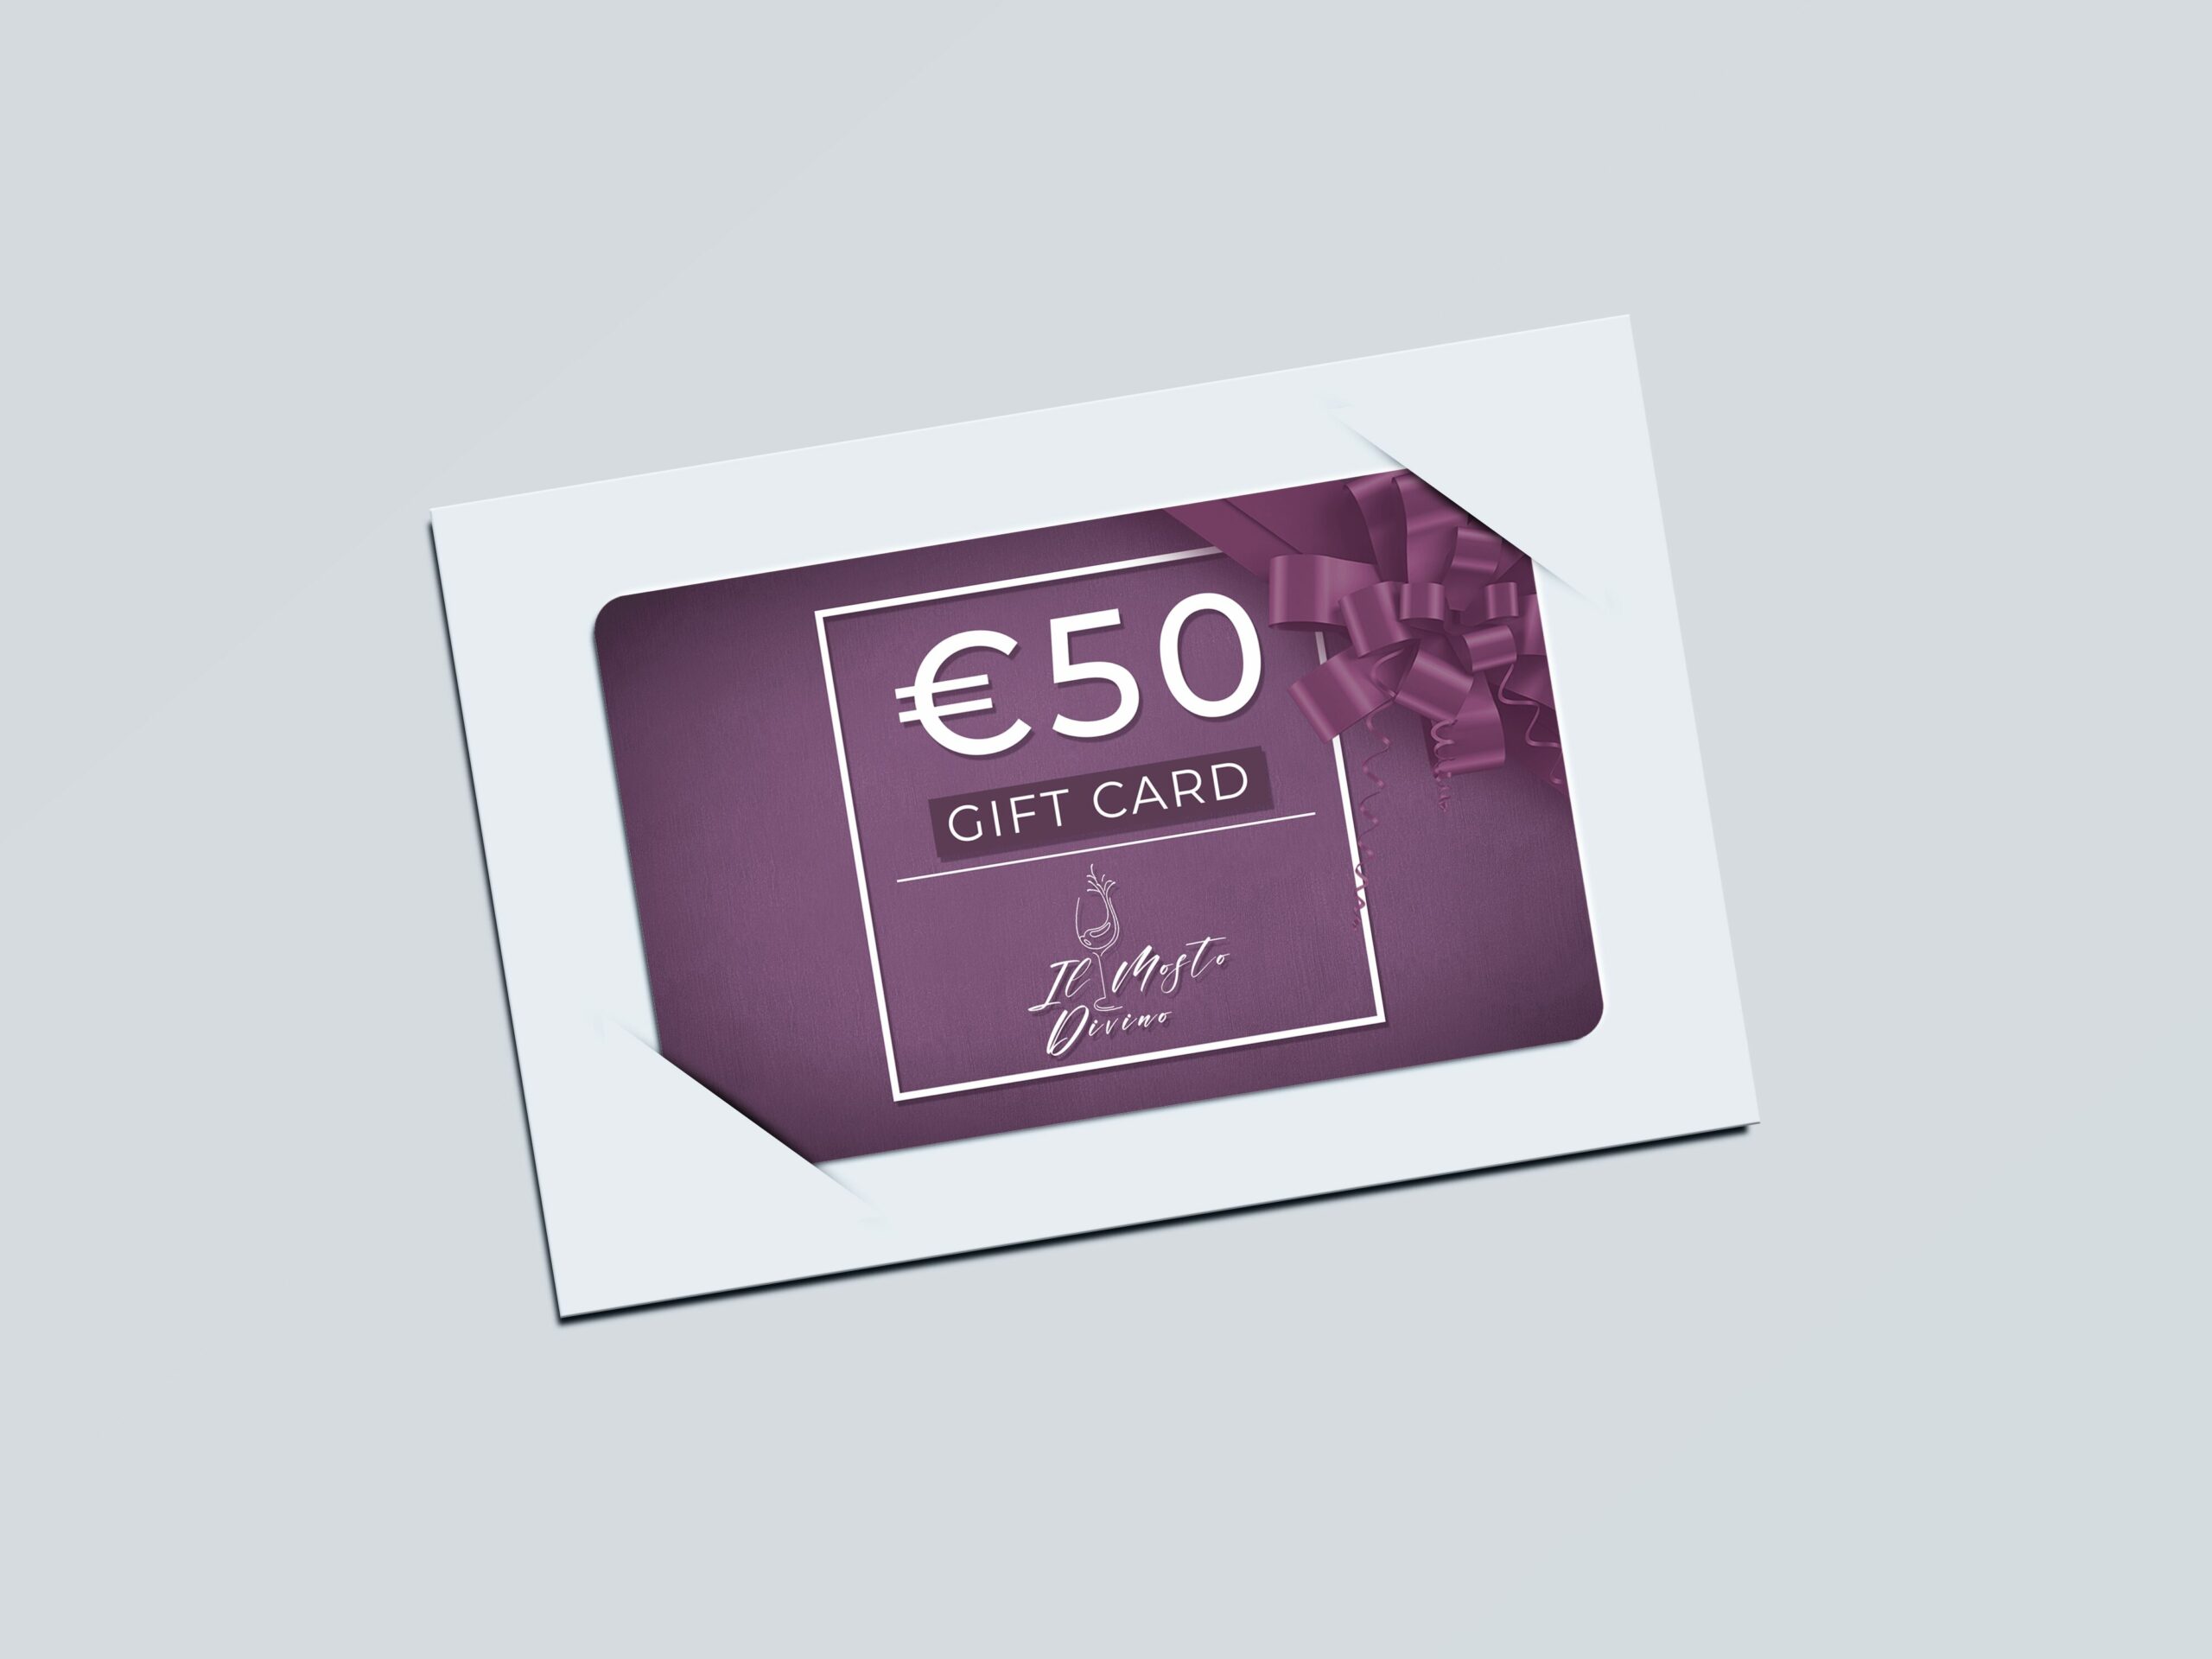 giftcard-mosto-card-50-euro-mosto-divino-milano